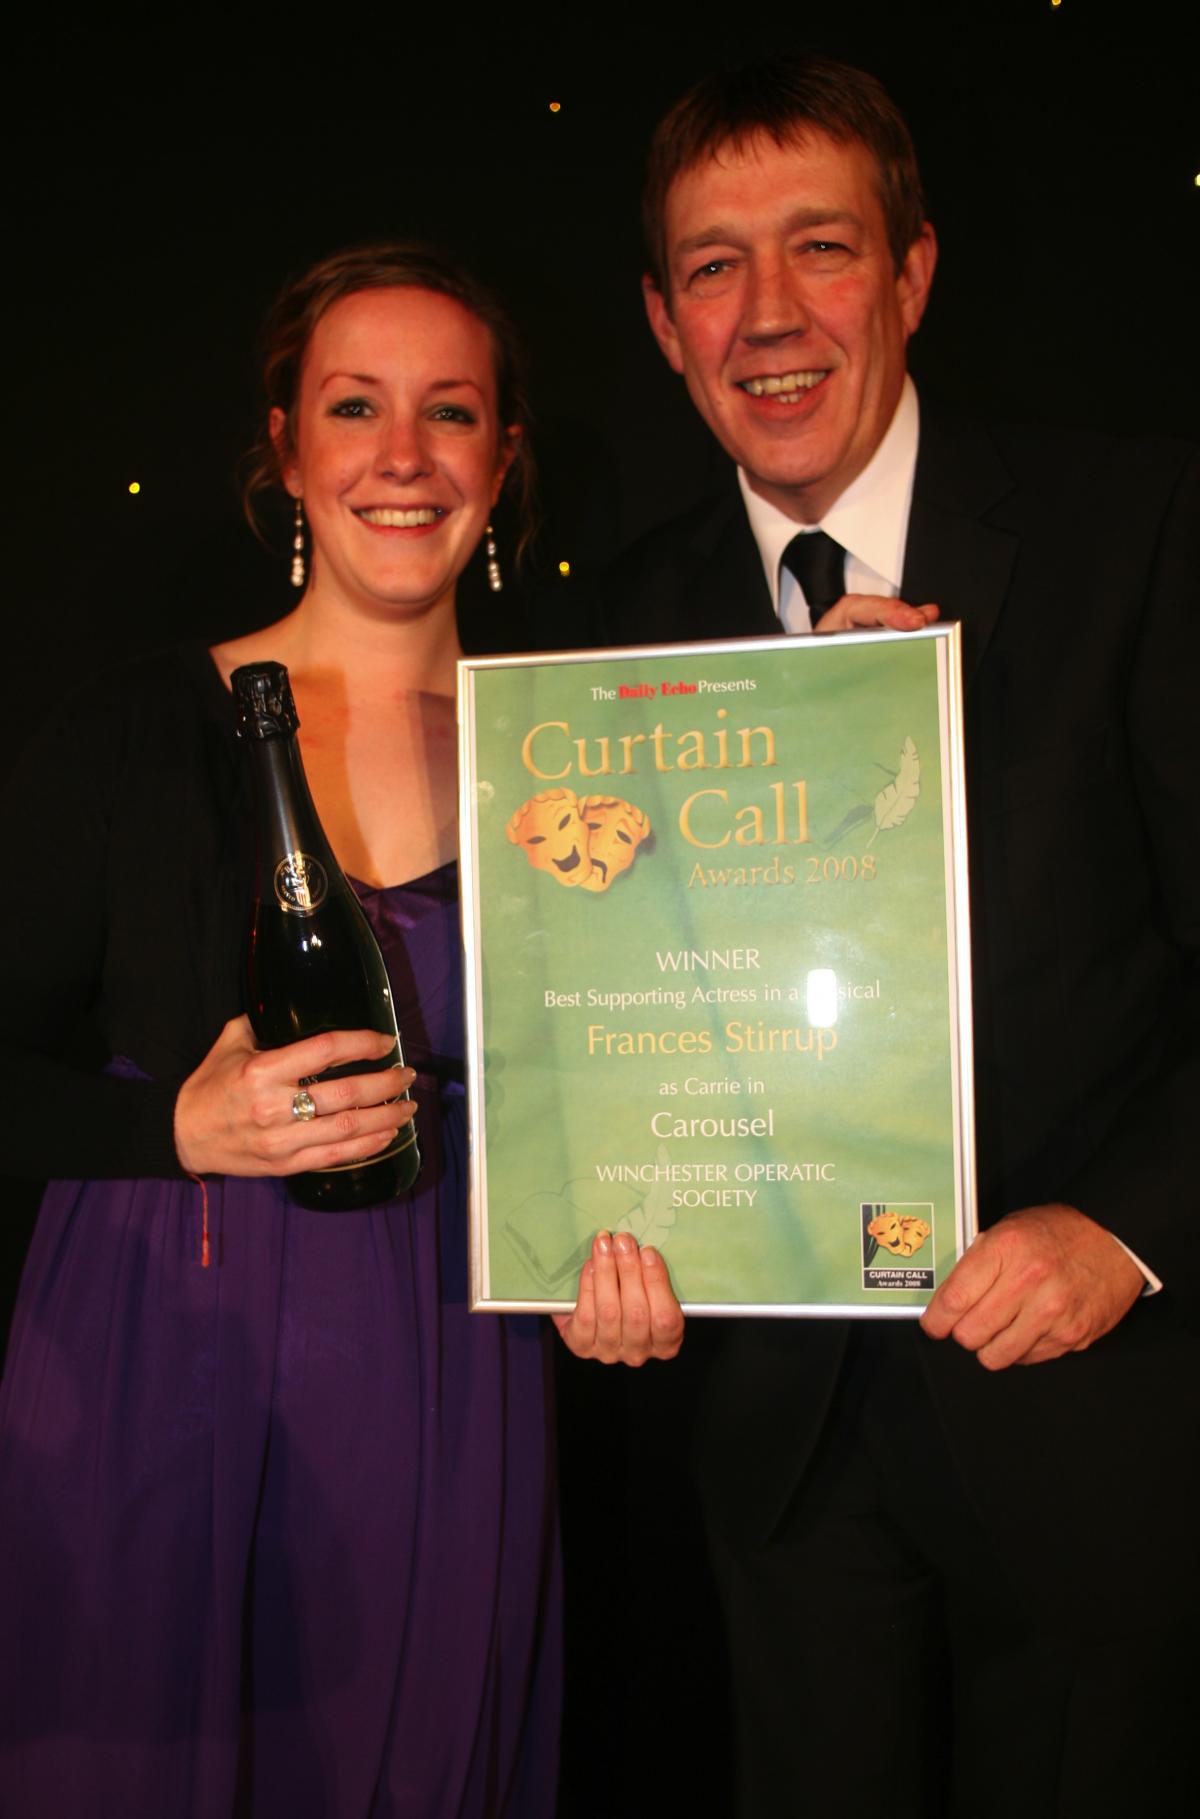 Curtain Call Awards 2009